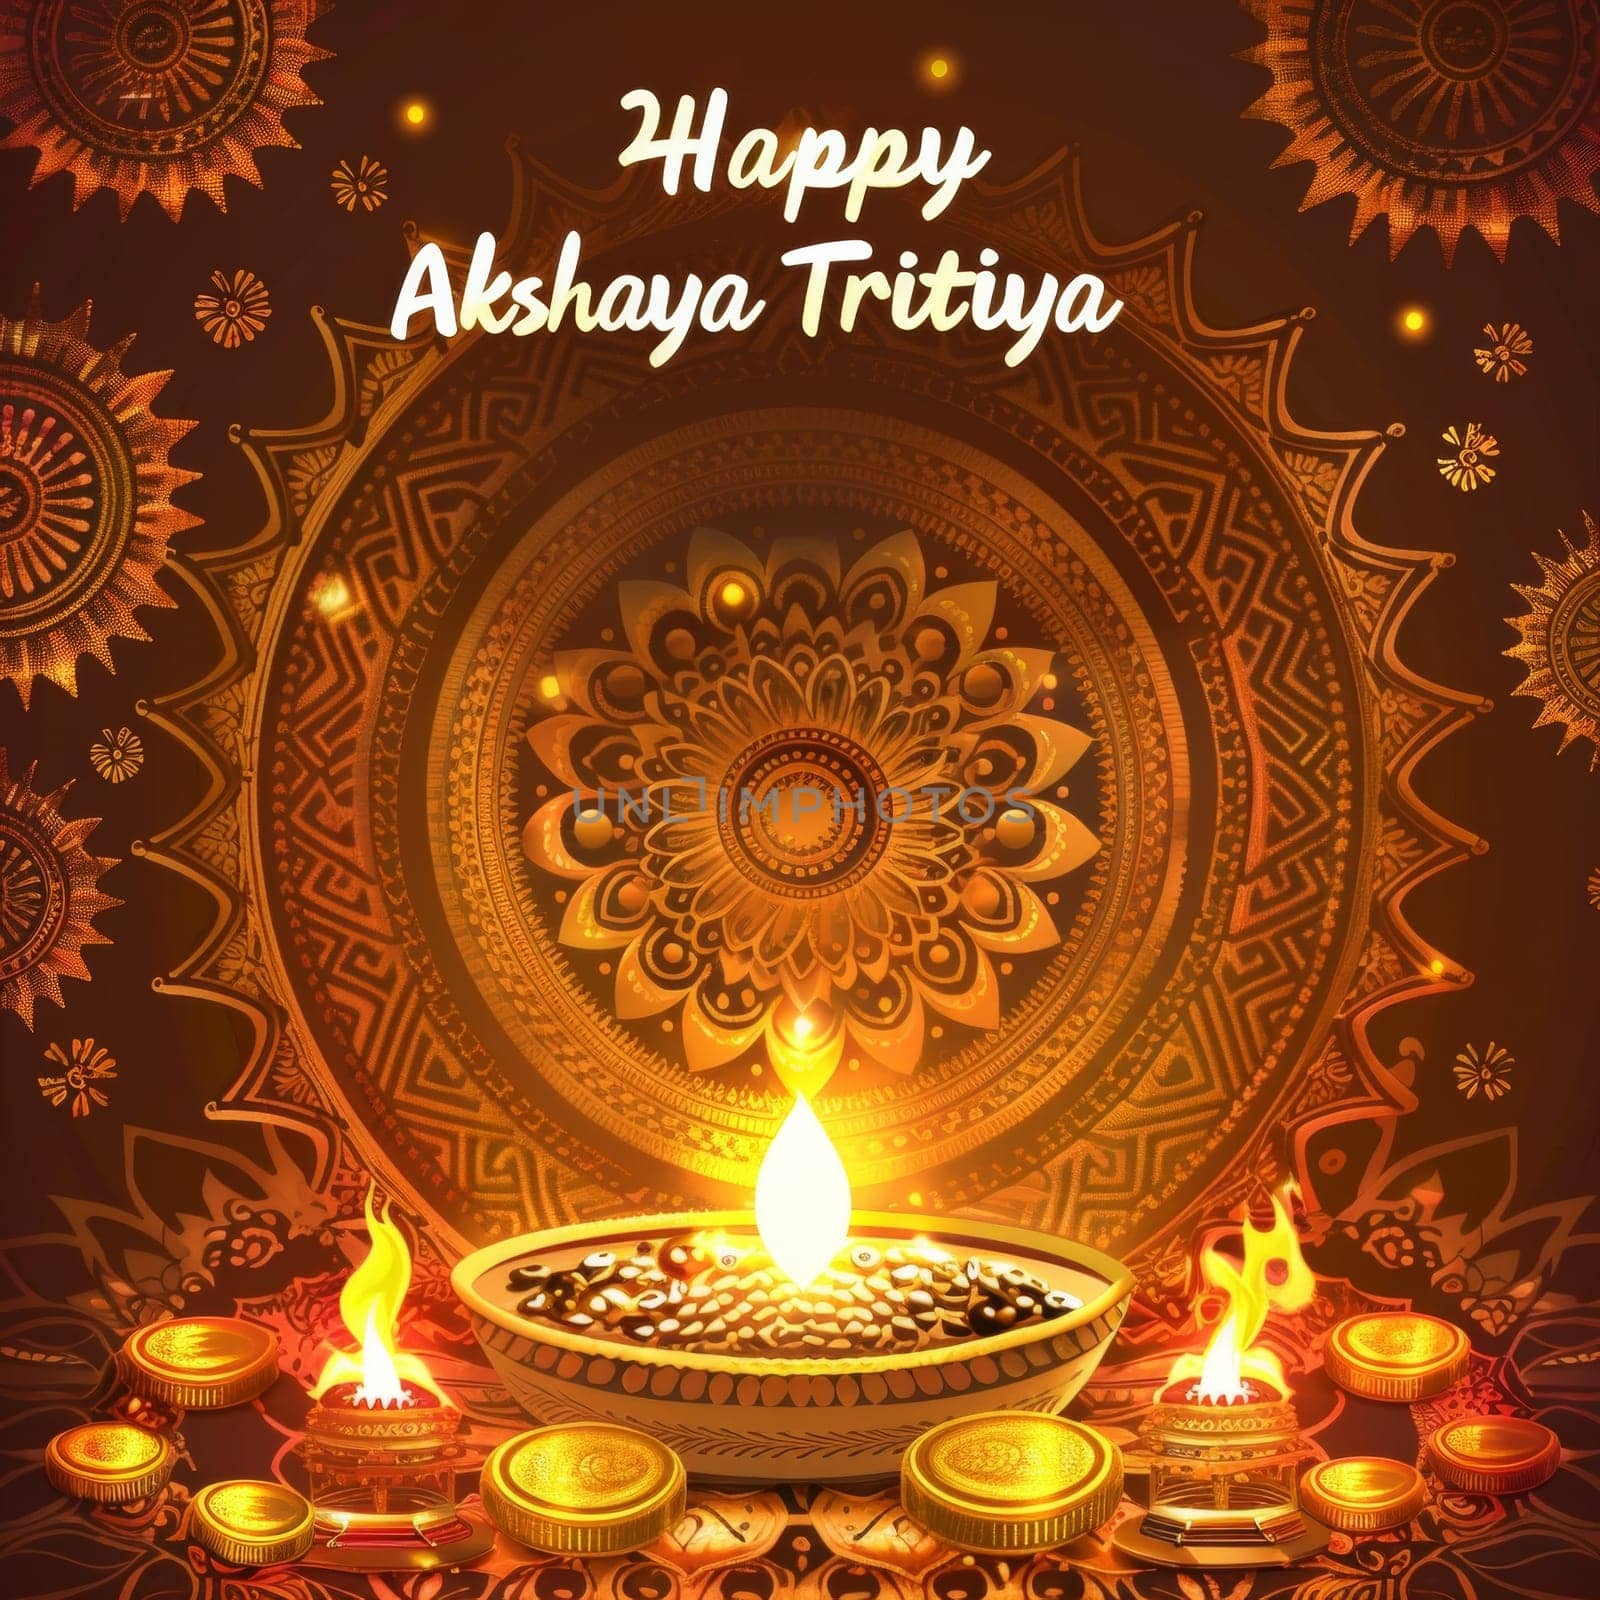 An ornate mandala and glowing diya set the scene for Akshaya Tritiya wishes, surrounded by gold coins symbolizing prosperity. by sfinks